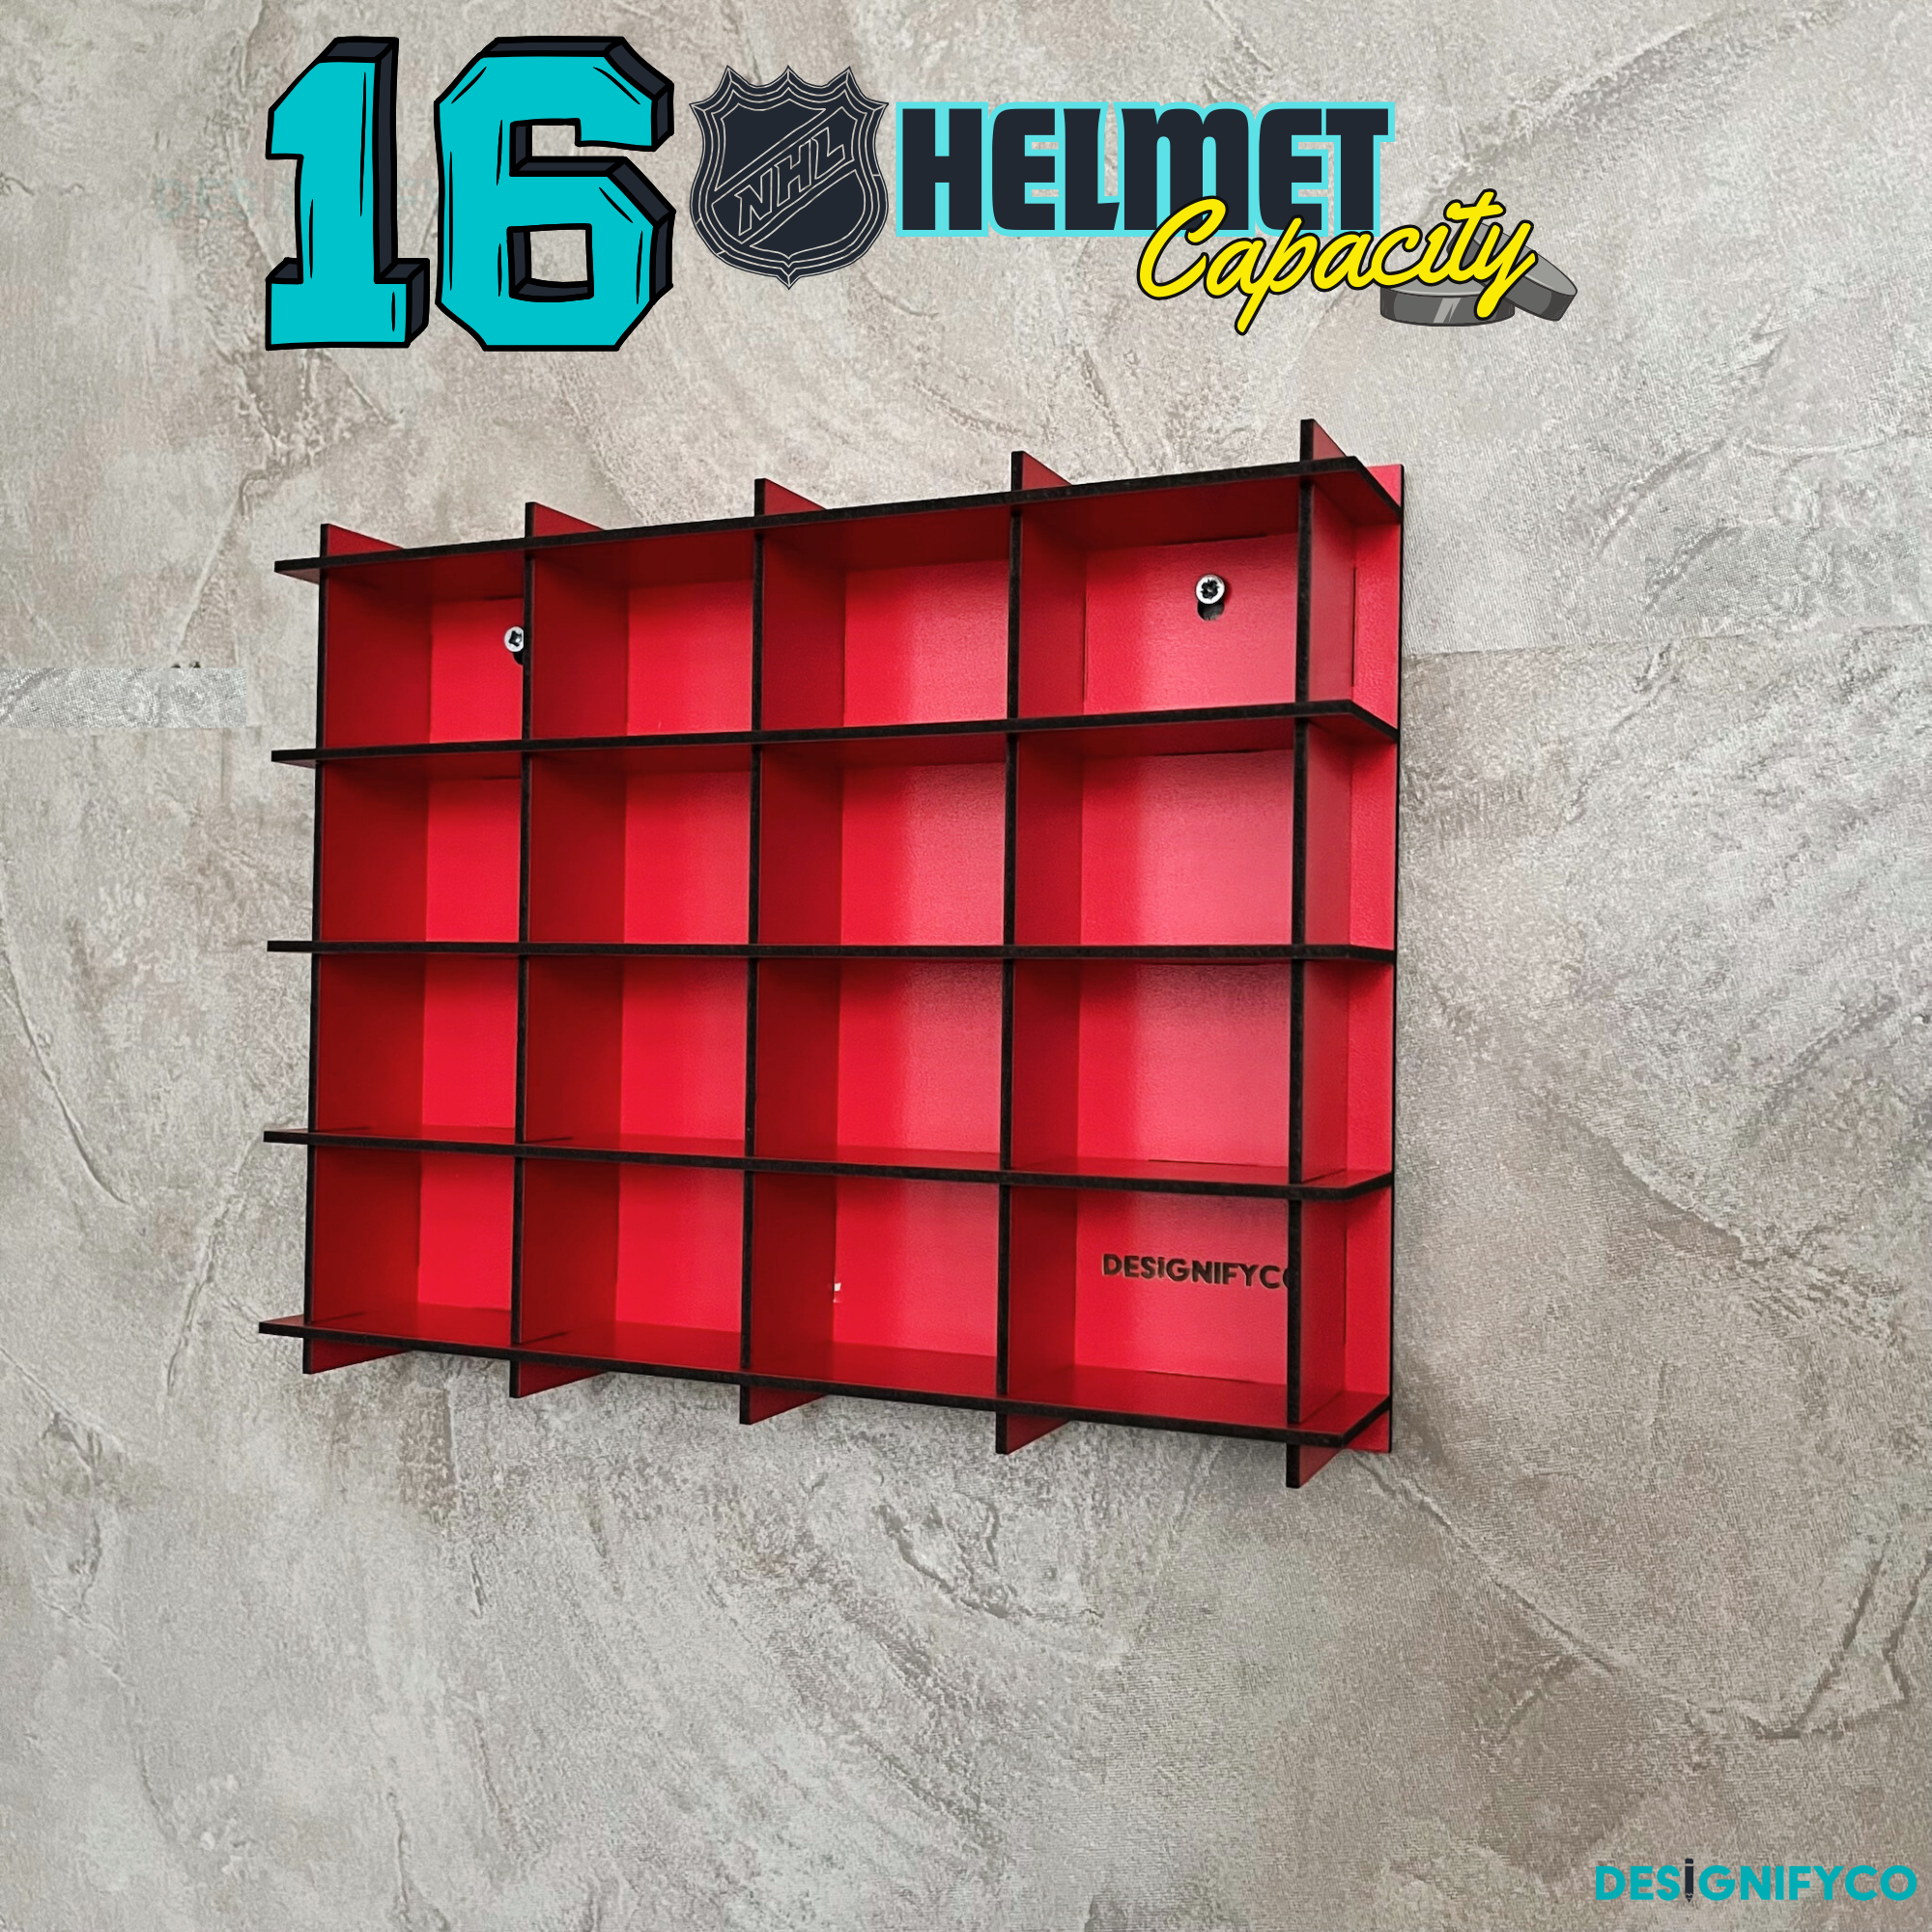 RED NHL Mini Helmet 16 Display Case